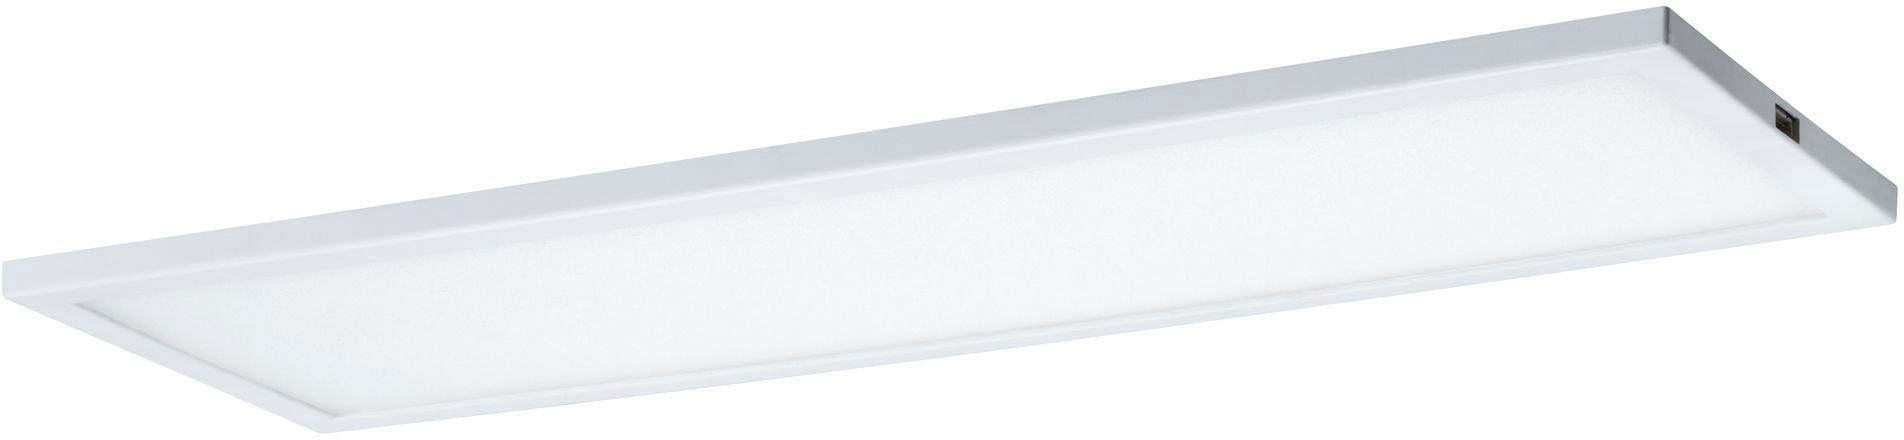 Paulmann Unterschrankleuchte Unterschrank-Panel LED Ace 7,5W Weiß 10x30cm Basisset, LED fest integriert, Warmweiß, Unterschrank-Panel LED Ace 7,5W Weiß 10x30cm Basisset